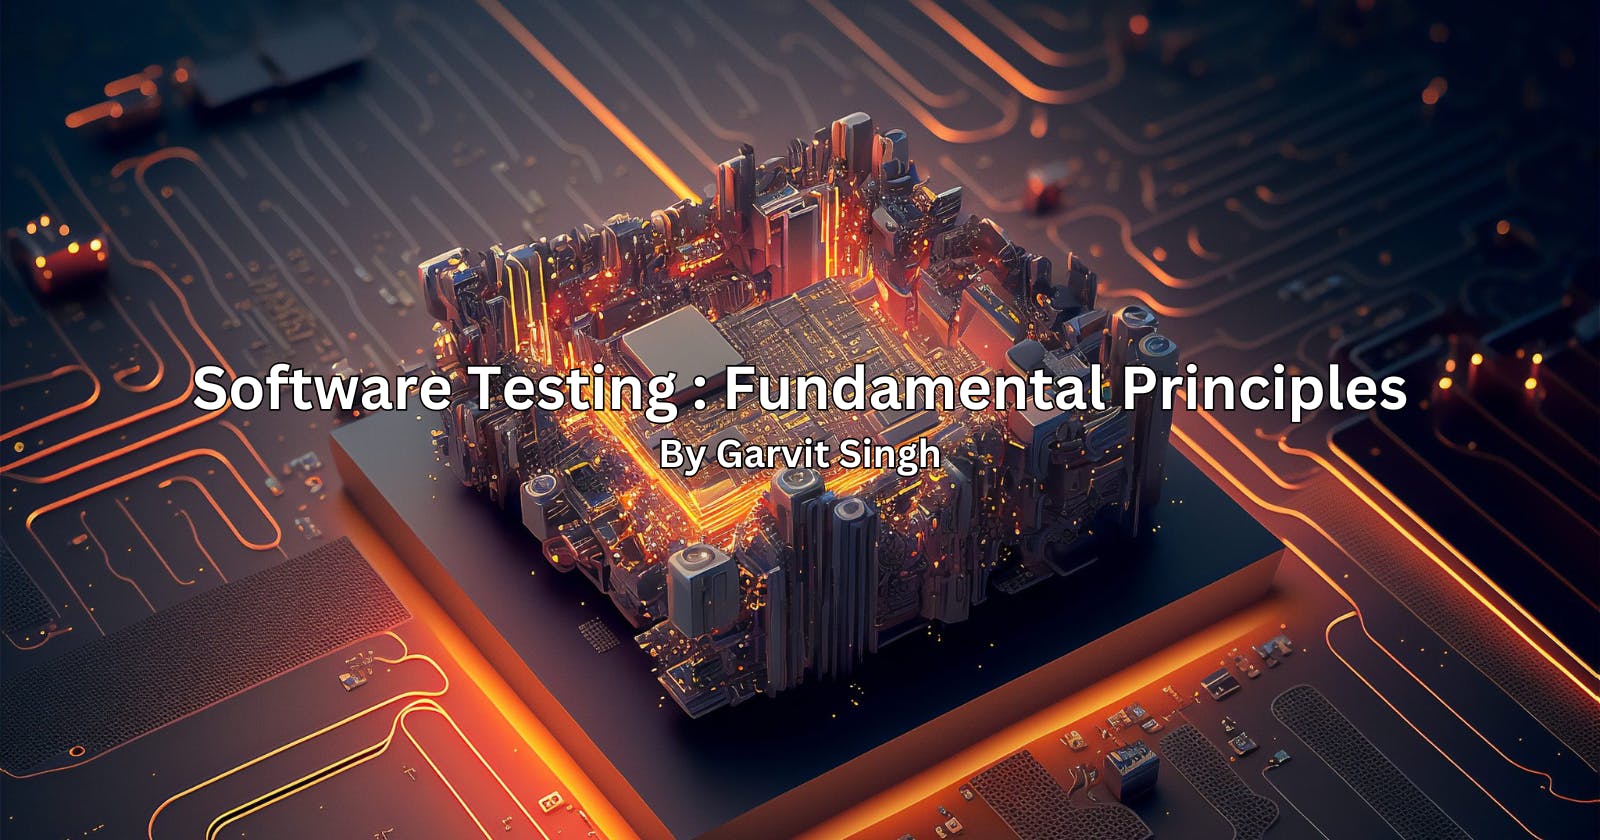 The Fundamental Principles Of Software Testing